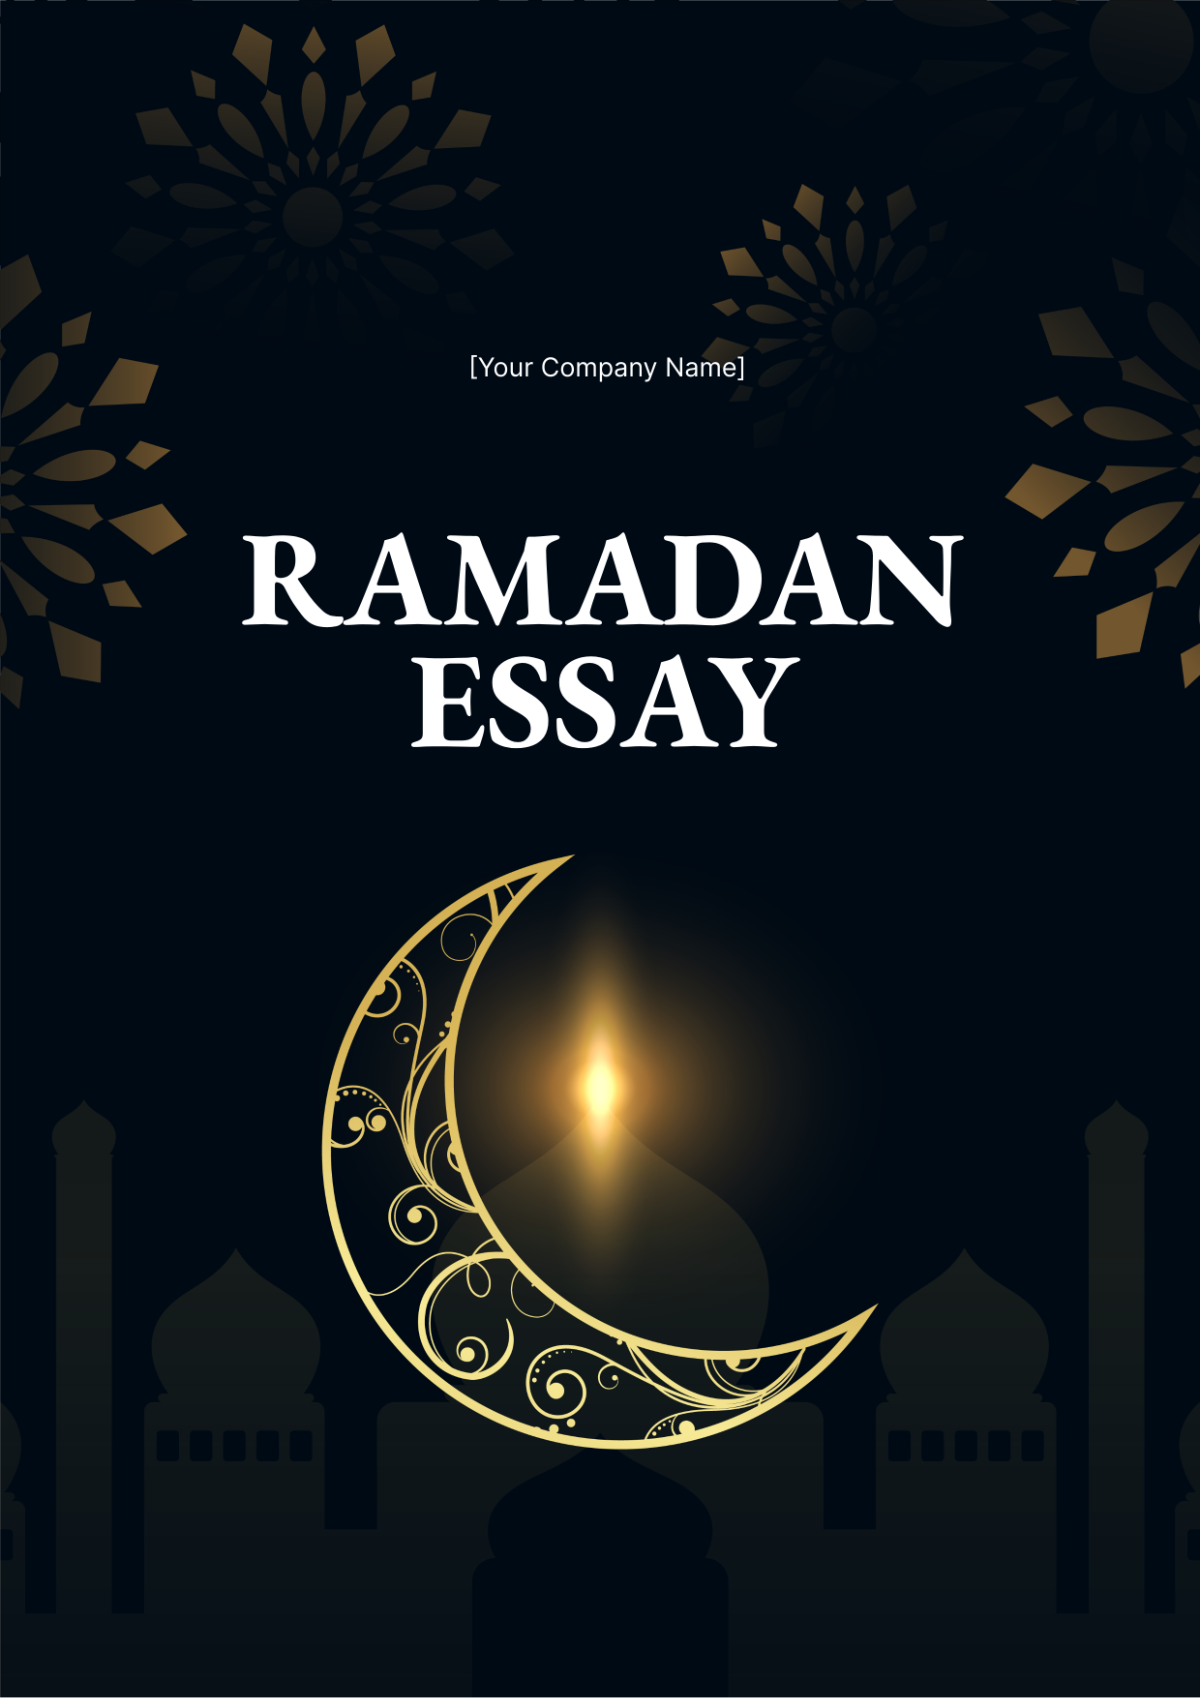 Ramadan Essay for Class Students